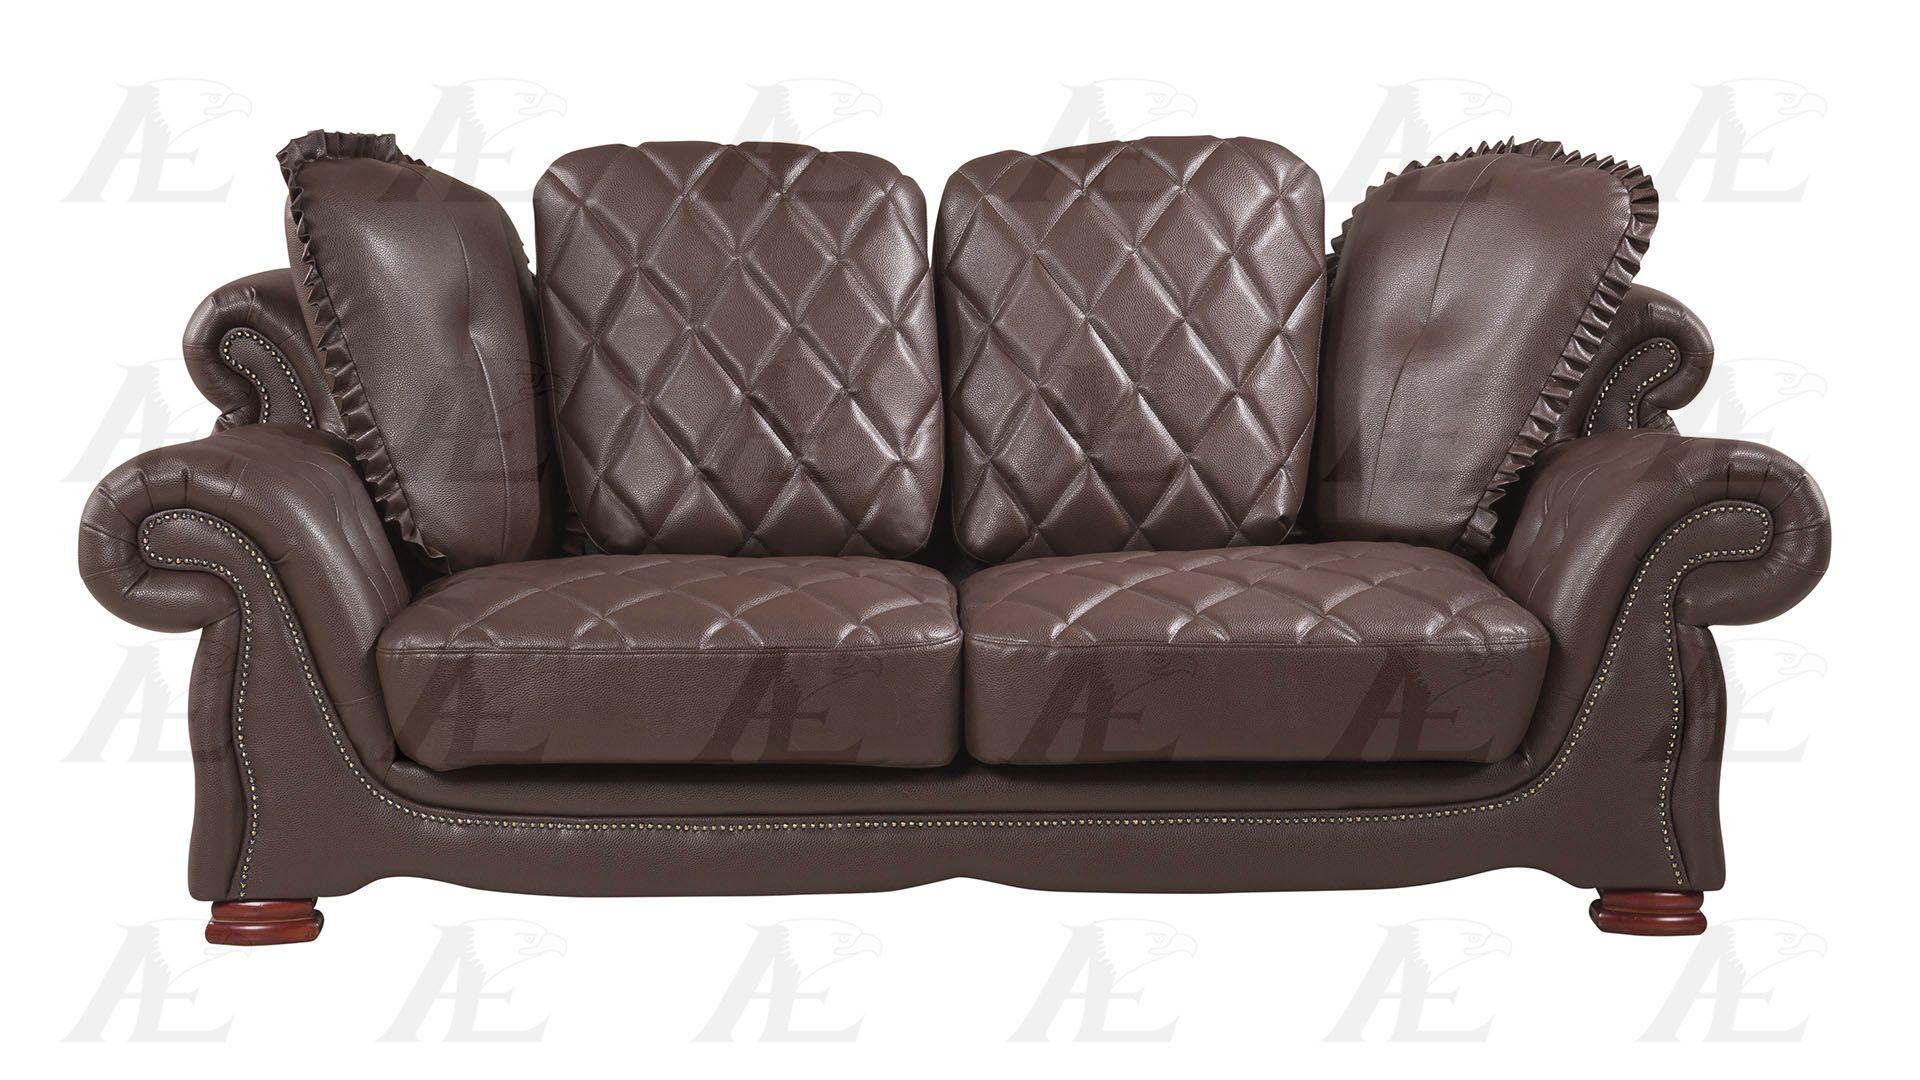 

    
American Eagle Furniture AE-D803-DB Sofa and Loveseat Set Dark Brown AE-D803-DB - Set-2
